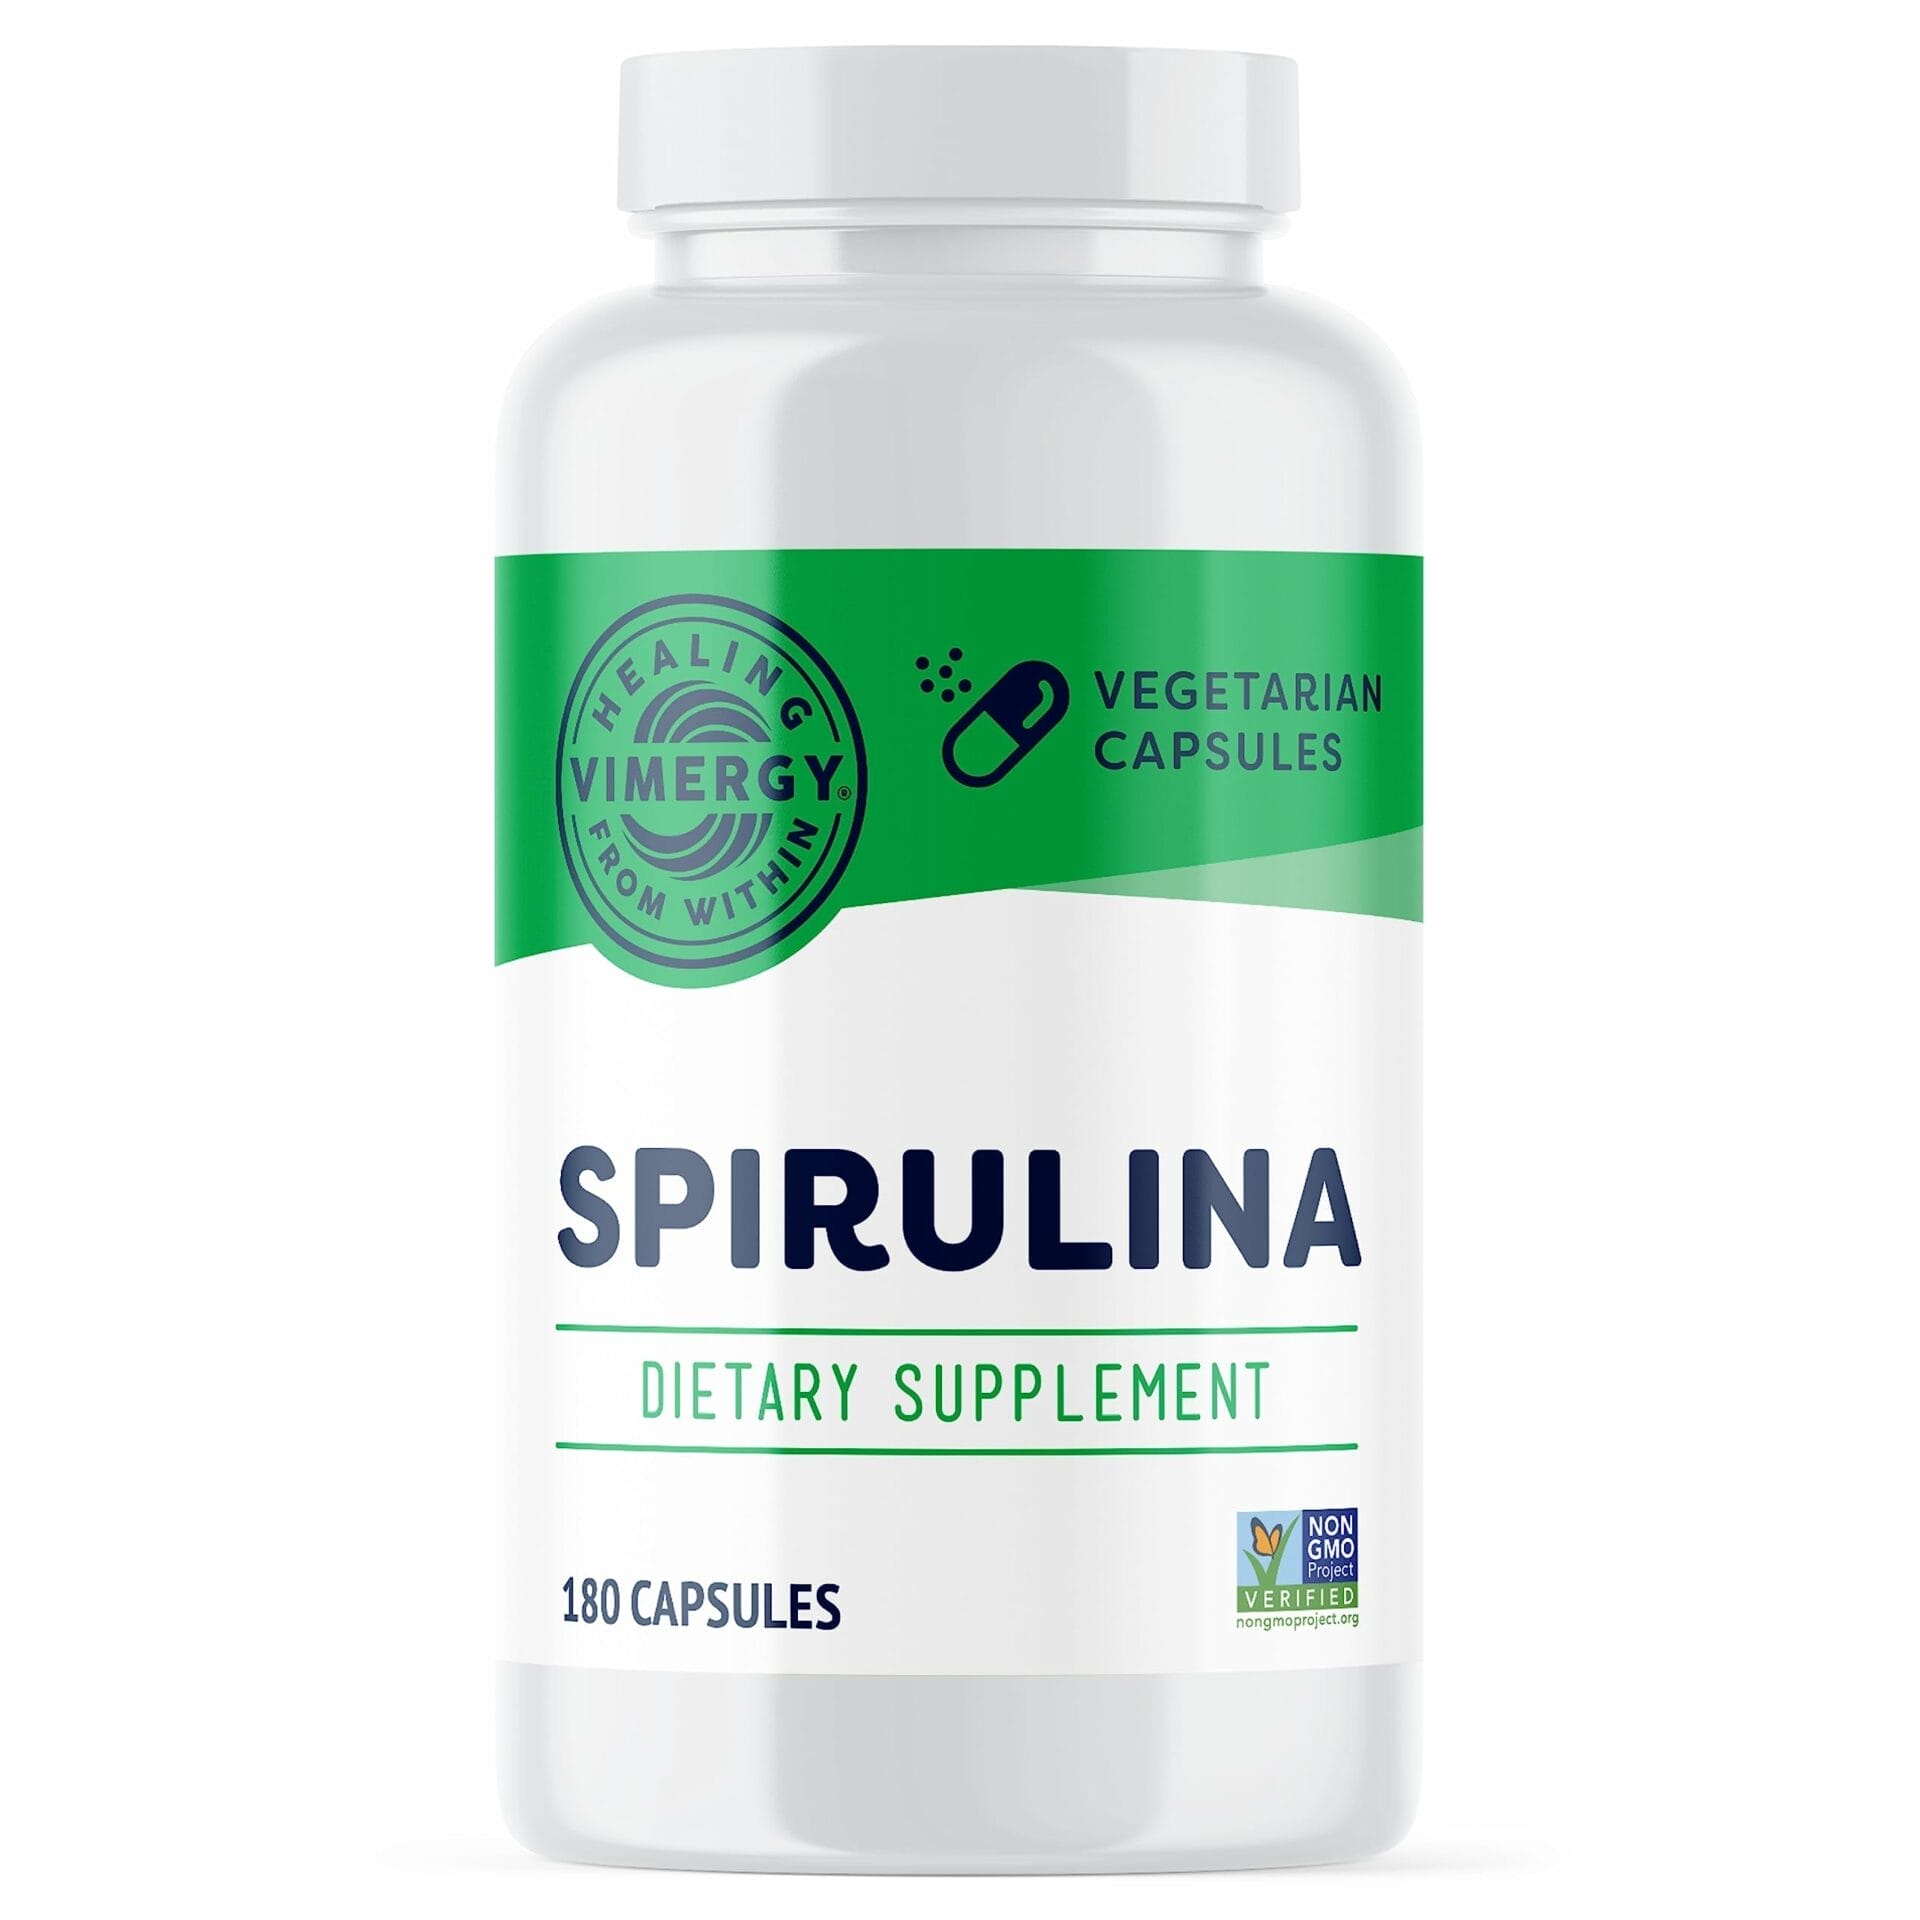 Vimergy Natural Spirulina Capsules